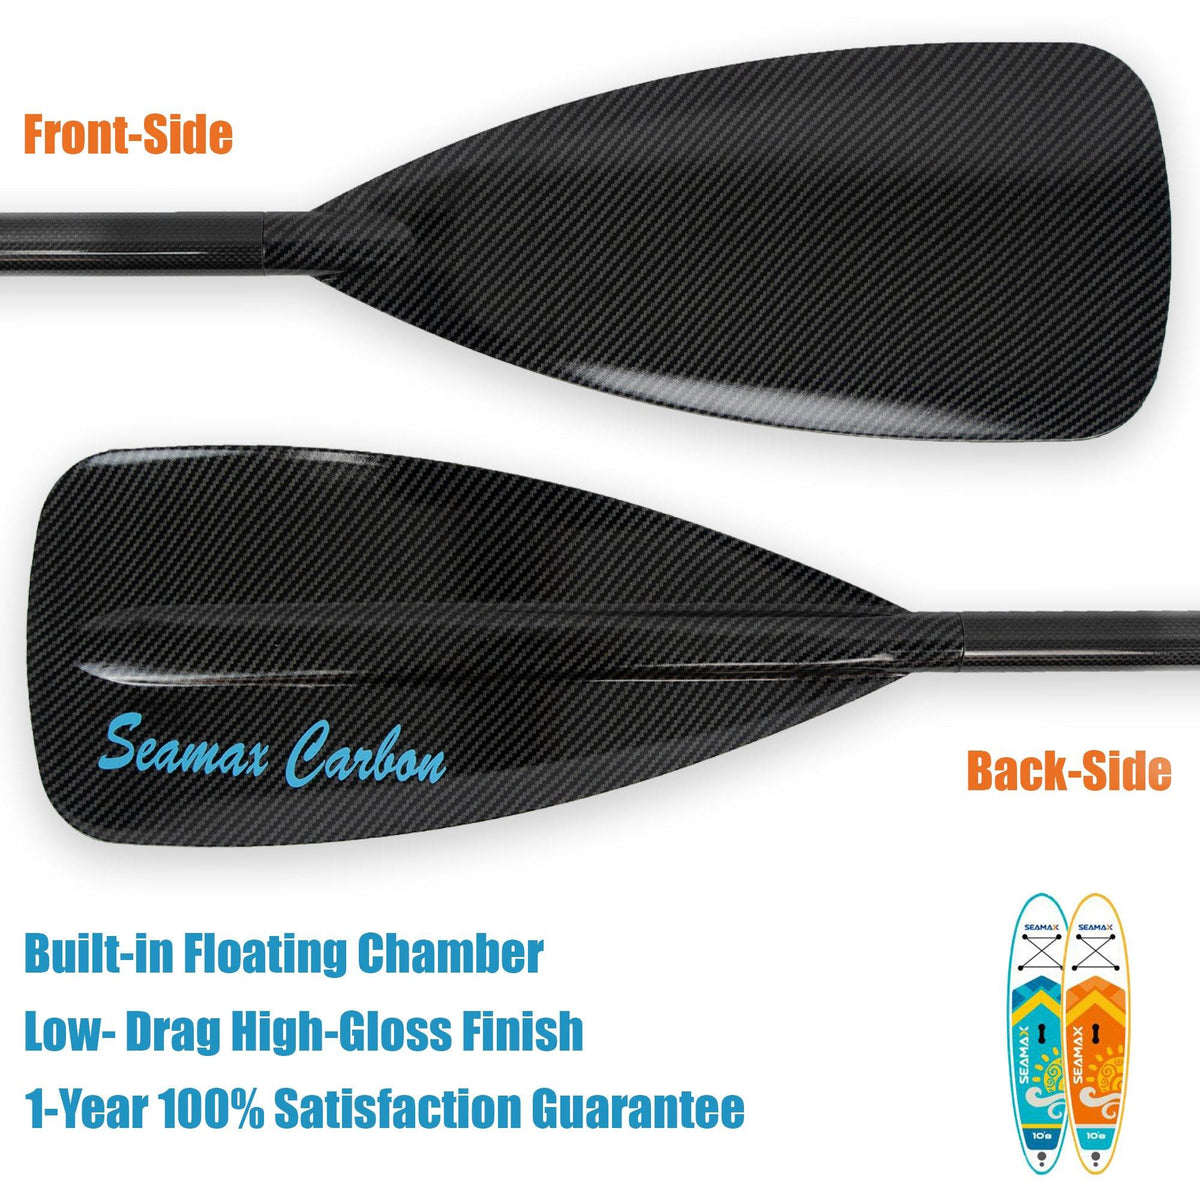 SUP Paddle with Shaft Aluminum Seamax 3-Sections Fibergl Adjustable - Marine and Rigid